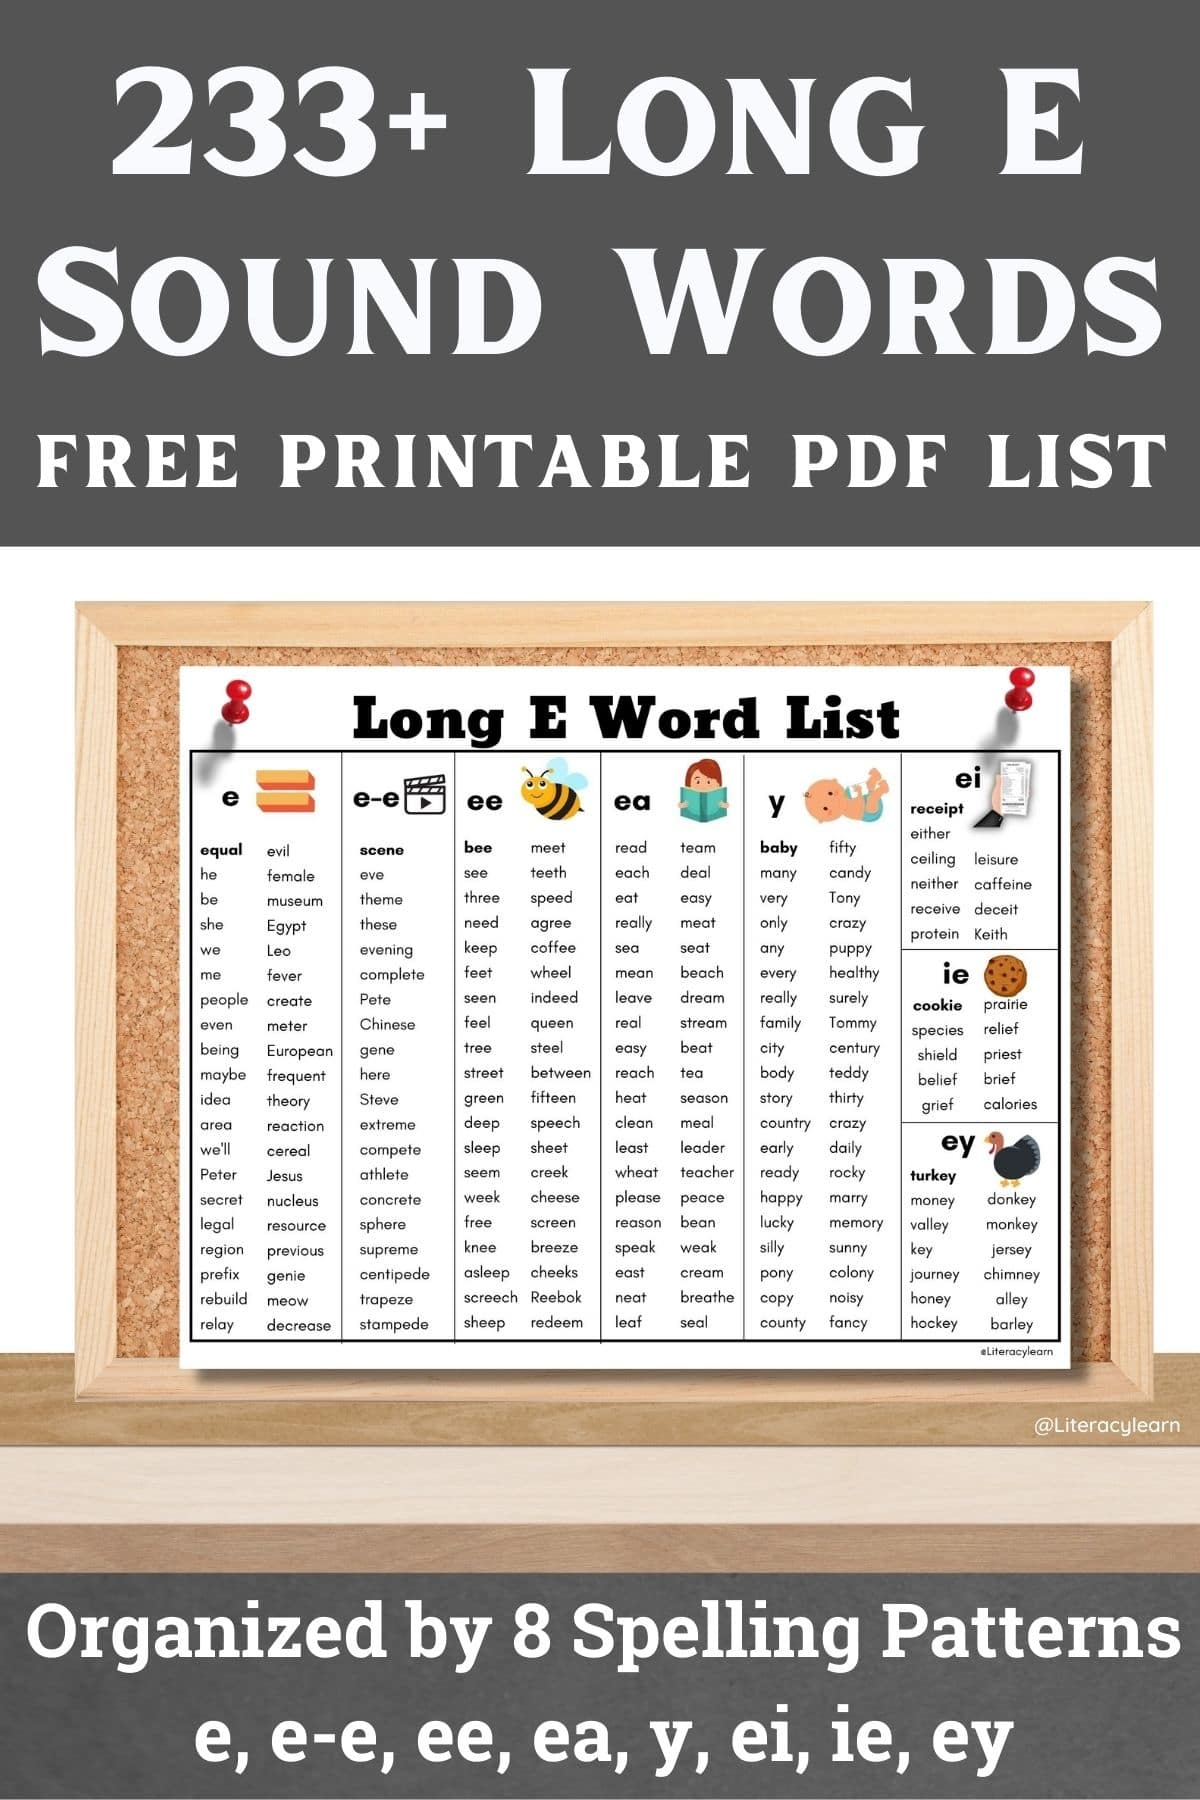 Corkboard featuring Long E vowel sound words list. Large font '233 Long E Sound Words"